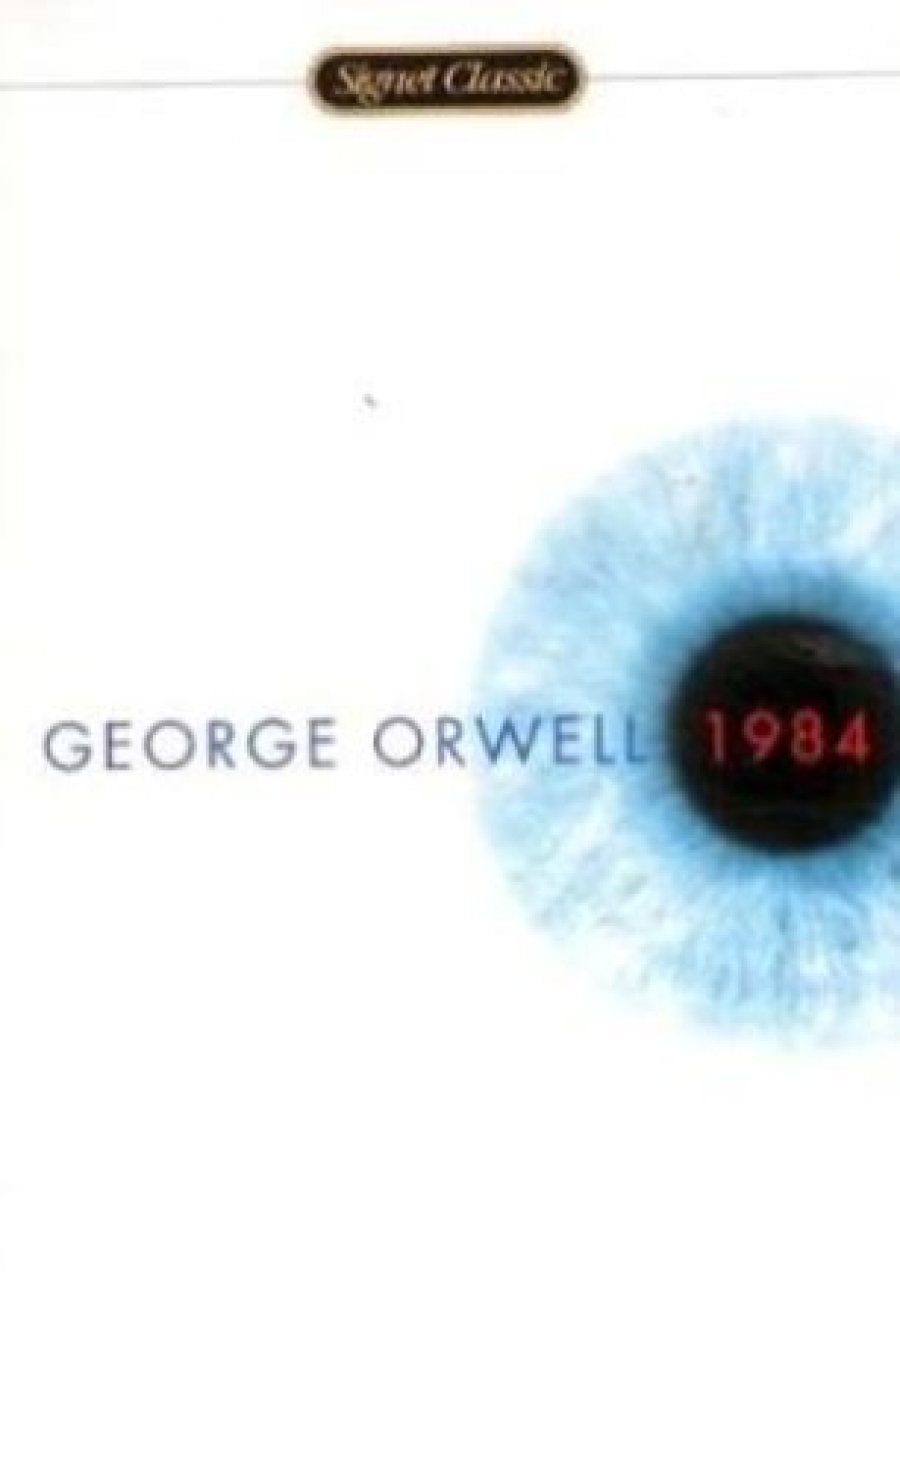 George Orwell 1984. Nineteen eighty four 